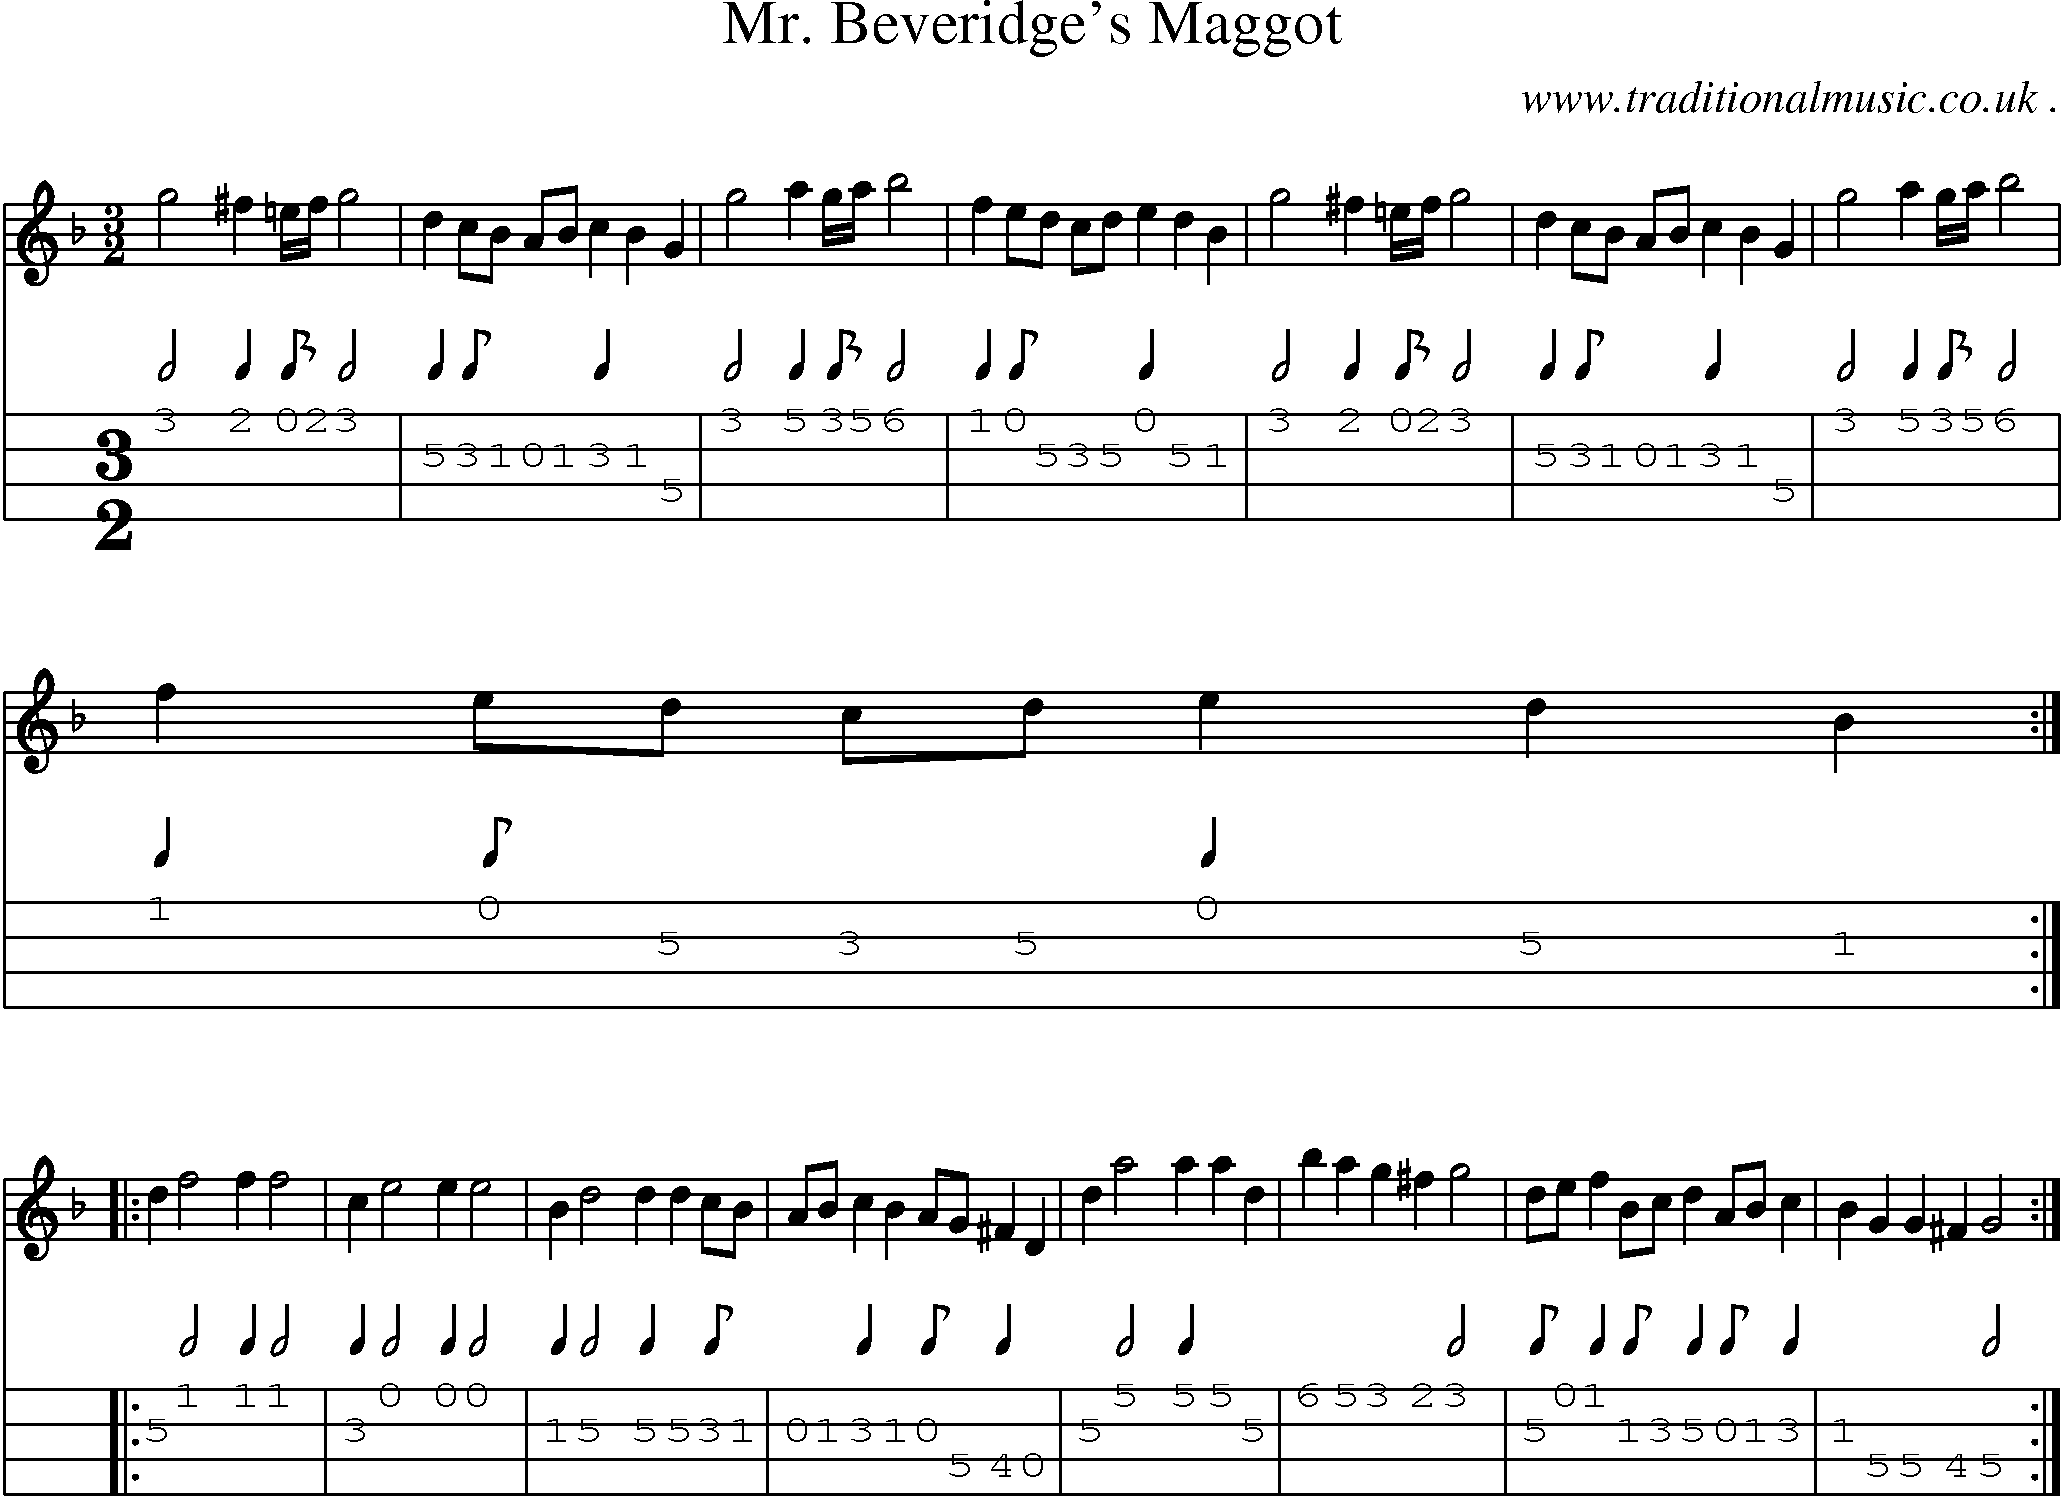 Sheet-Music and Mandolin Tabs for Mr Beveridges Maggot